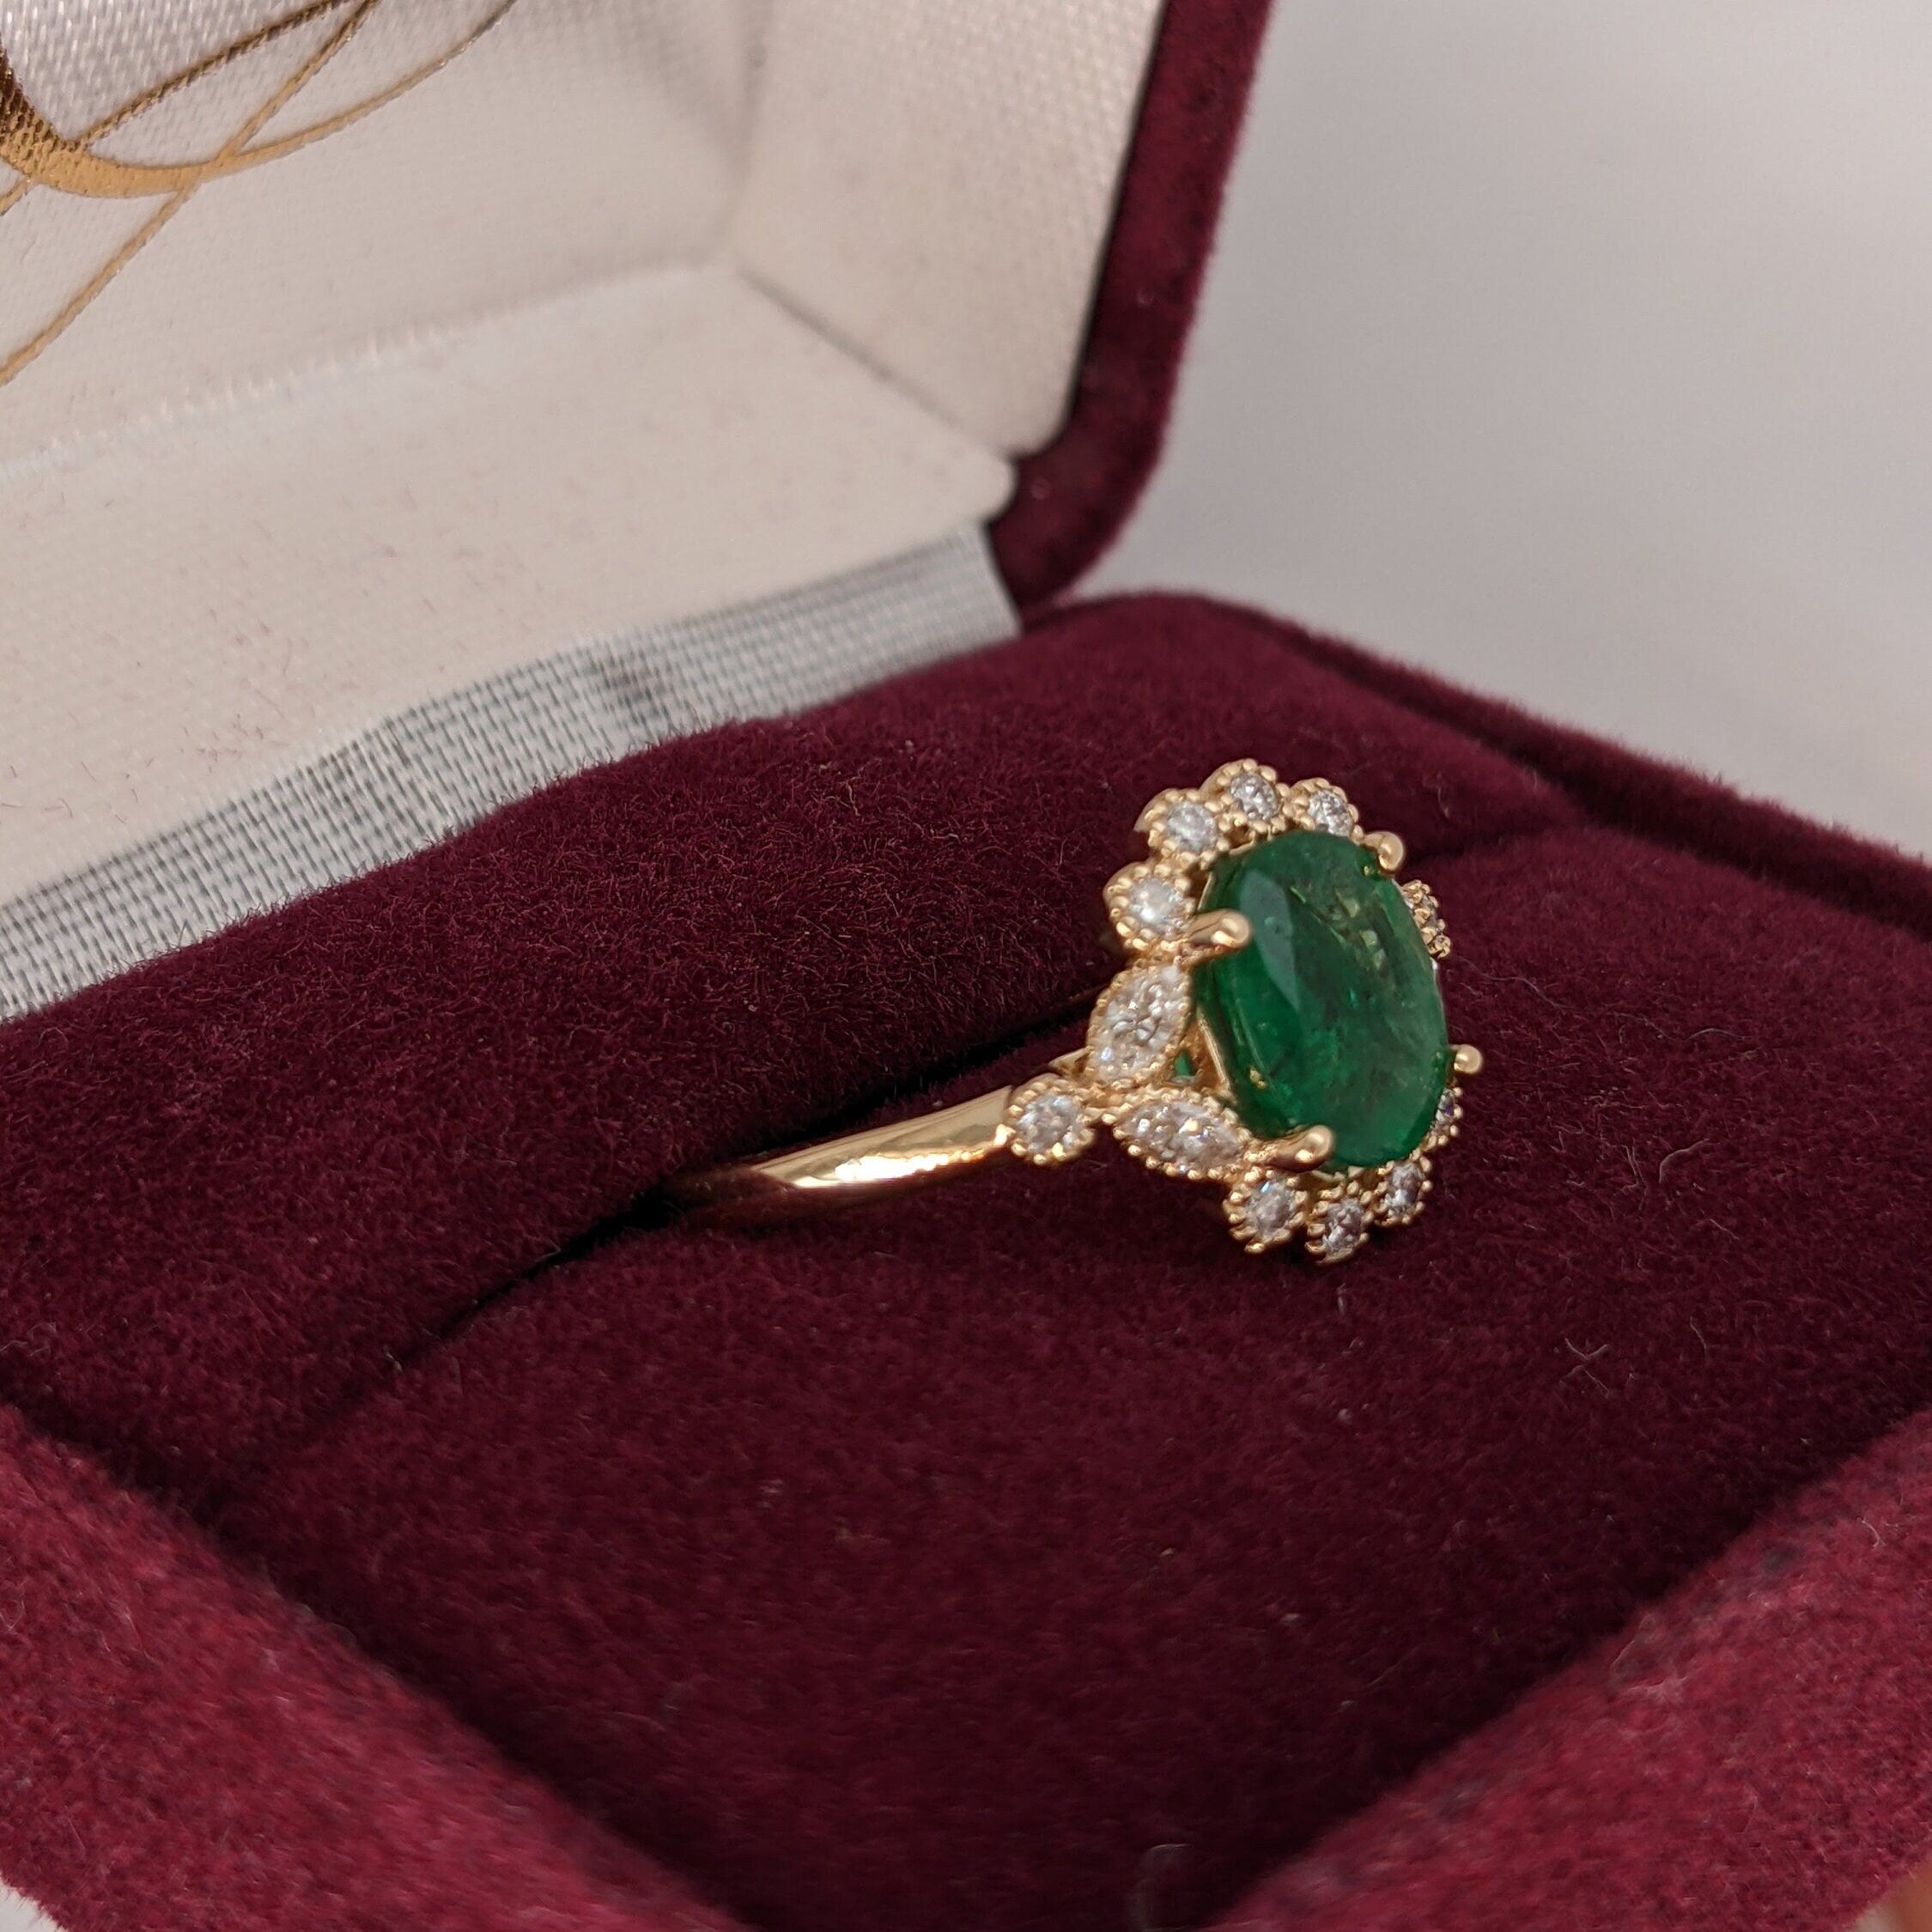 Vintage Inspired Green Emerald Ring In 14k Yellow Gold w/ Diamond Halo | Oval 8x6mm | May Birthstone | Milgrain Detail | Verdant Green Gem